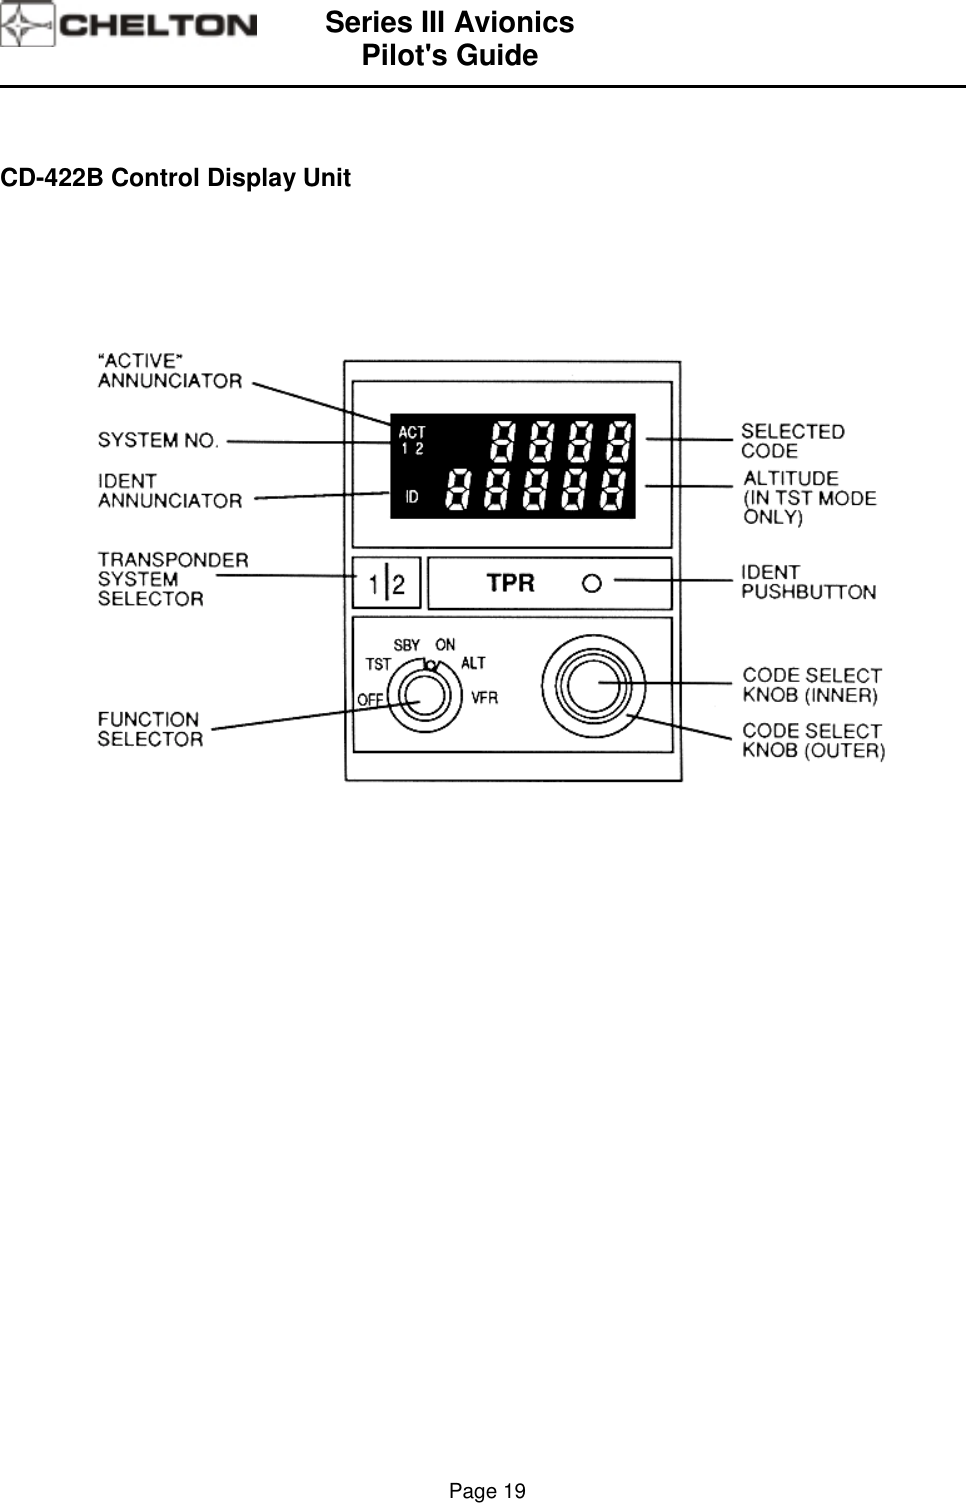 Series III AvionicsPilot&apos;s Guide                                                                                                                                          Page 19CD-422B Control Display Unit